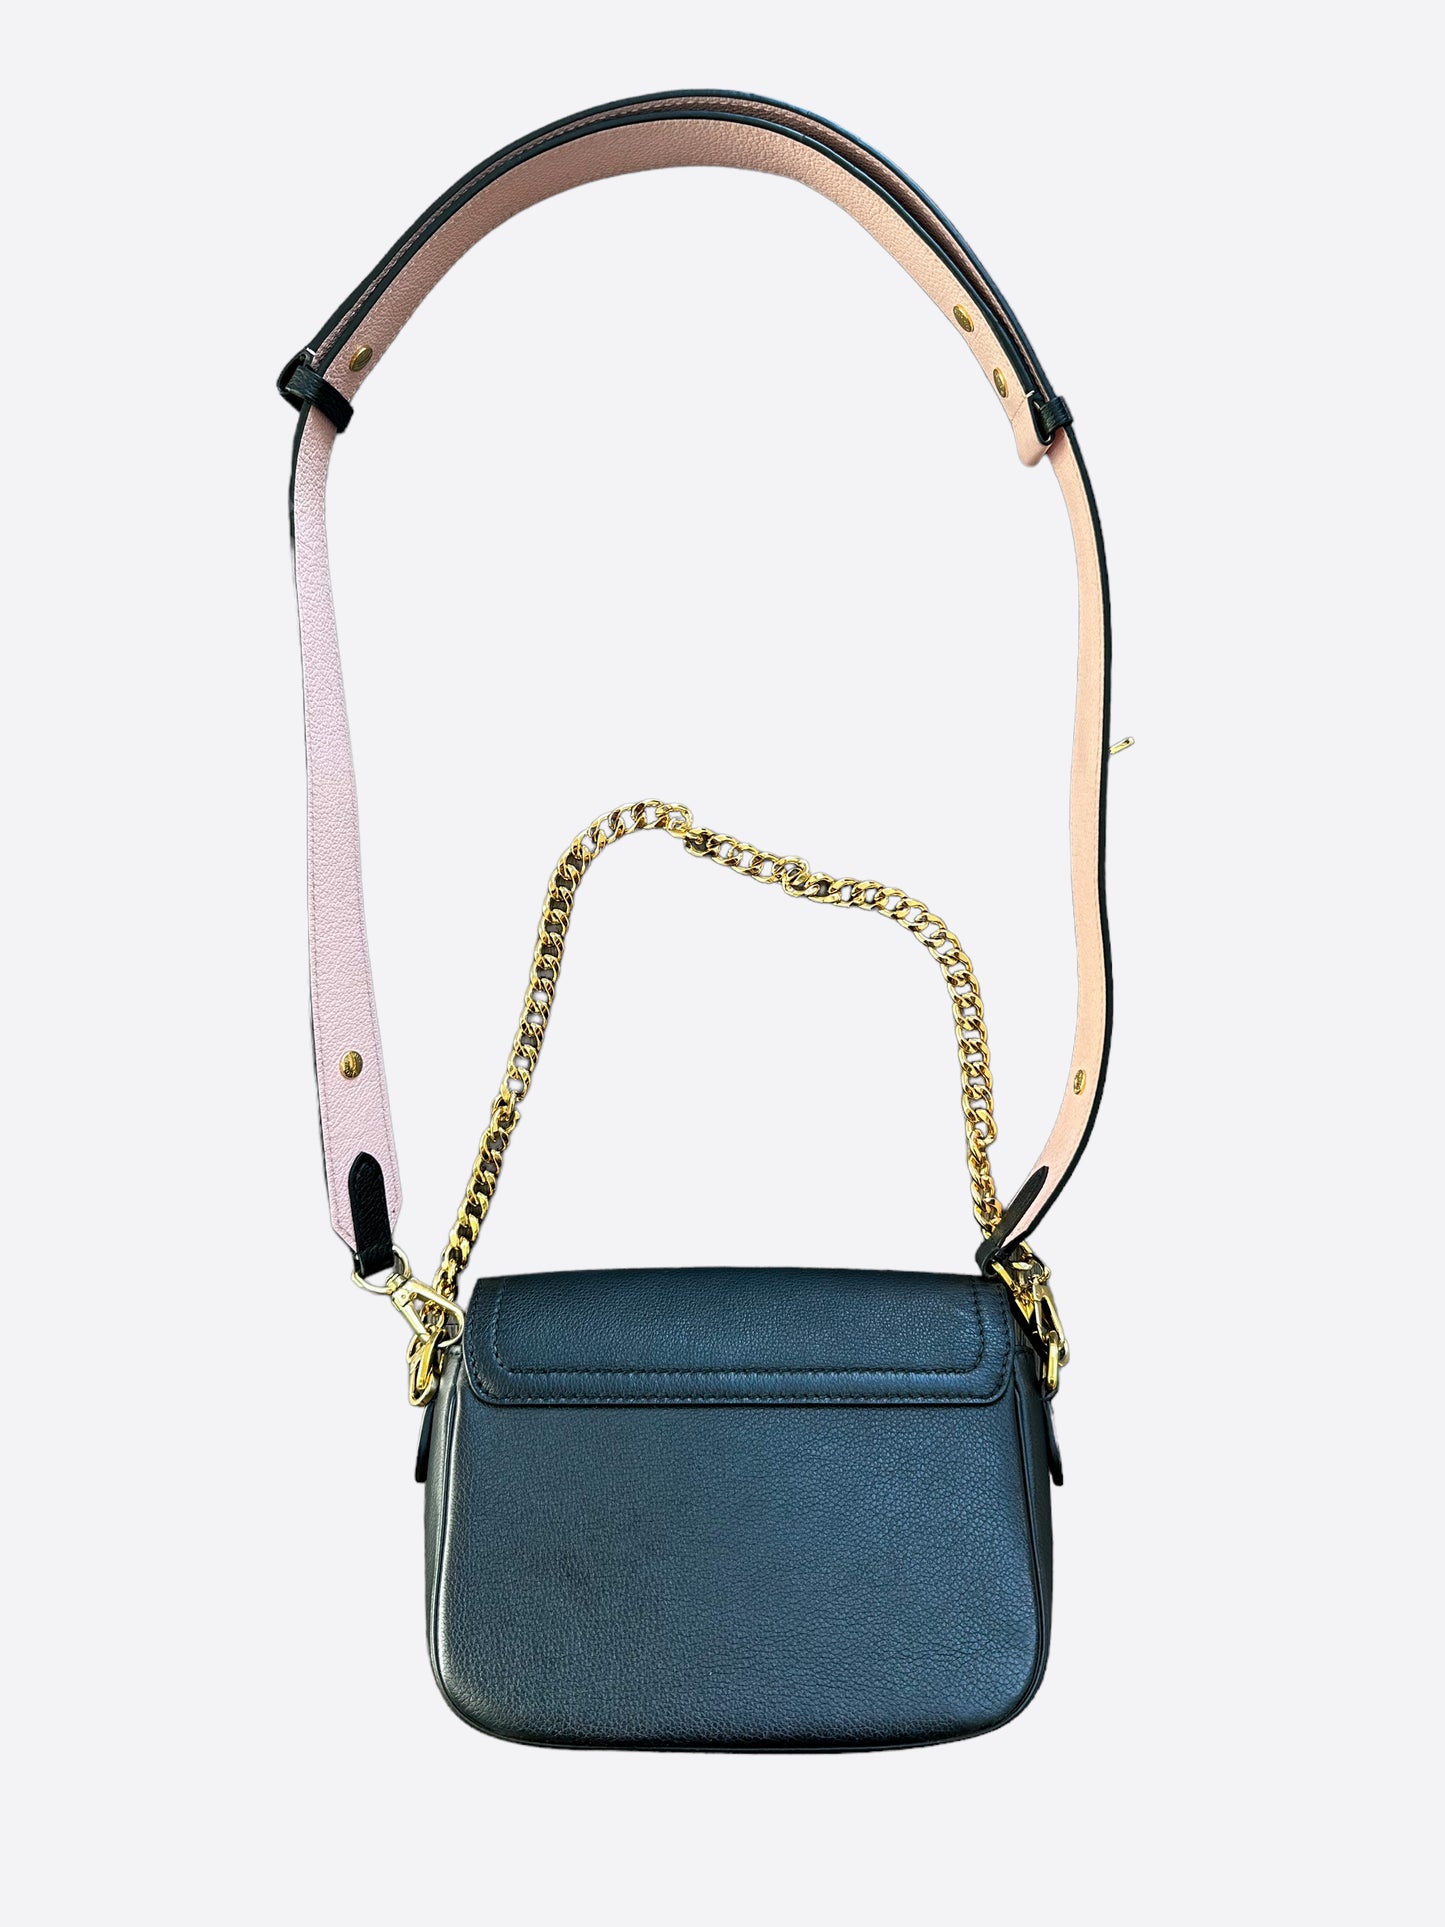 Handbags Louis Vuitton Louis Vuitton Lockme Tender Leather Handbag